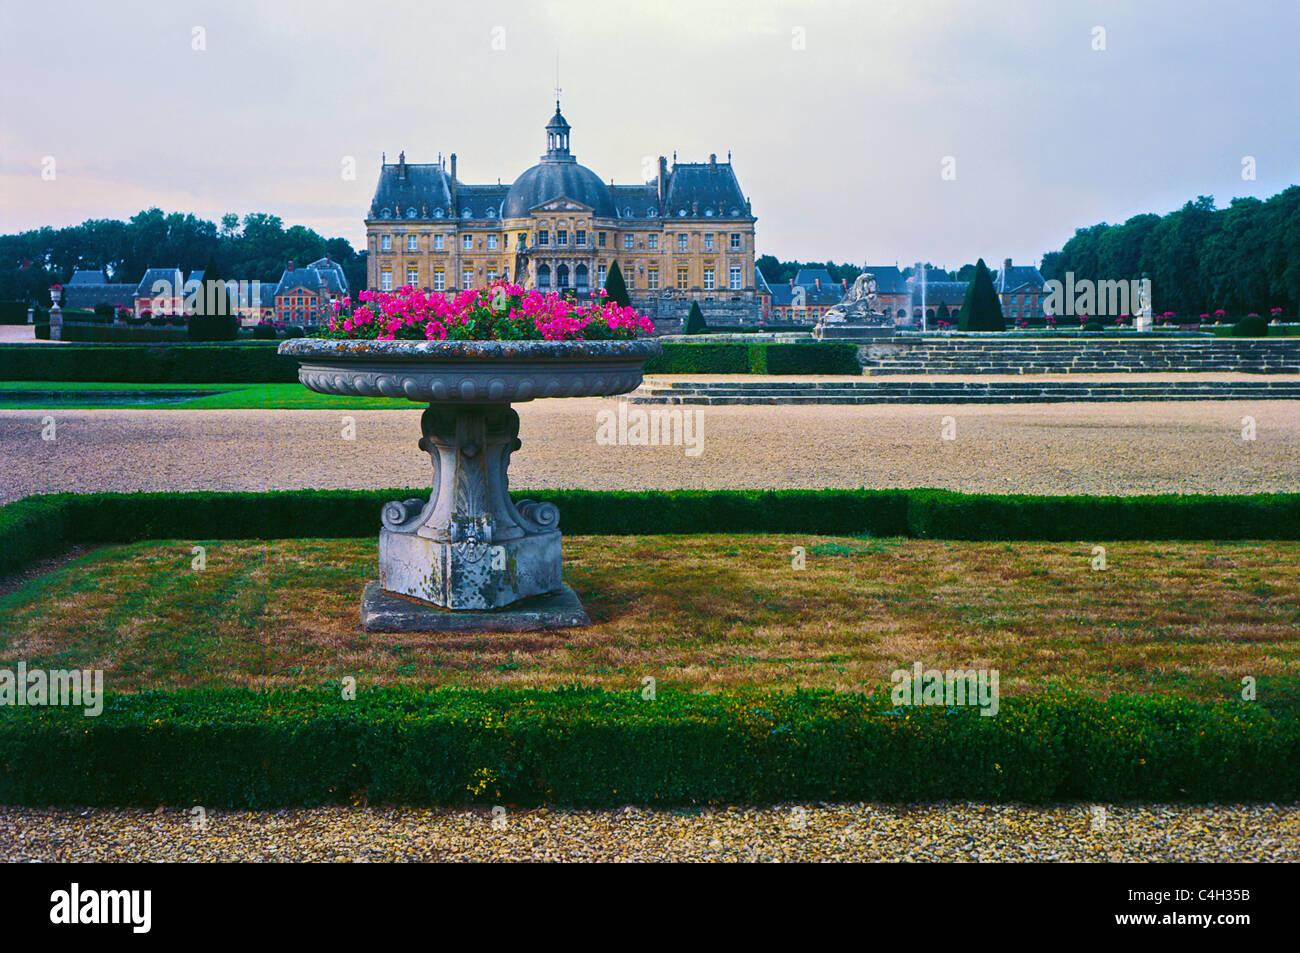 The Château de Vaux-le-Vicomte is a baroque French château located in Maincy, near Melun, 55 km southeast of Paris. Stock Photo